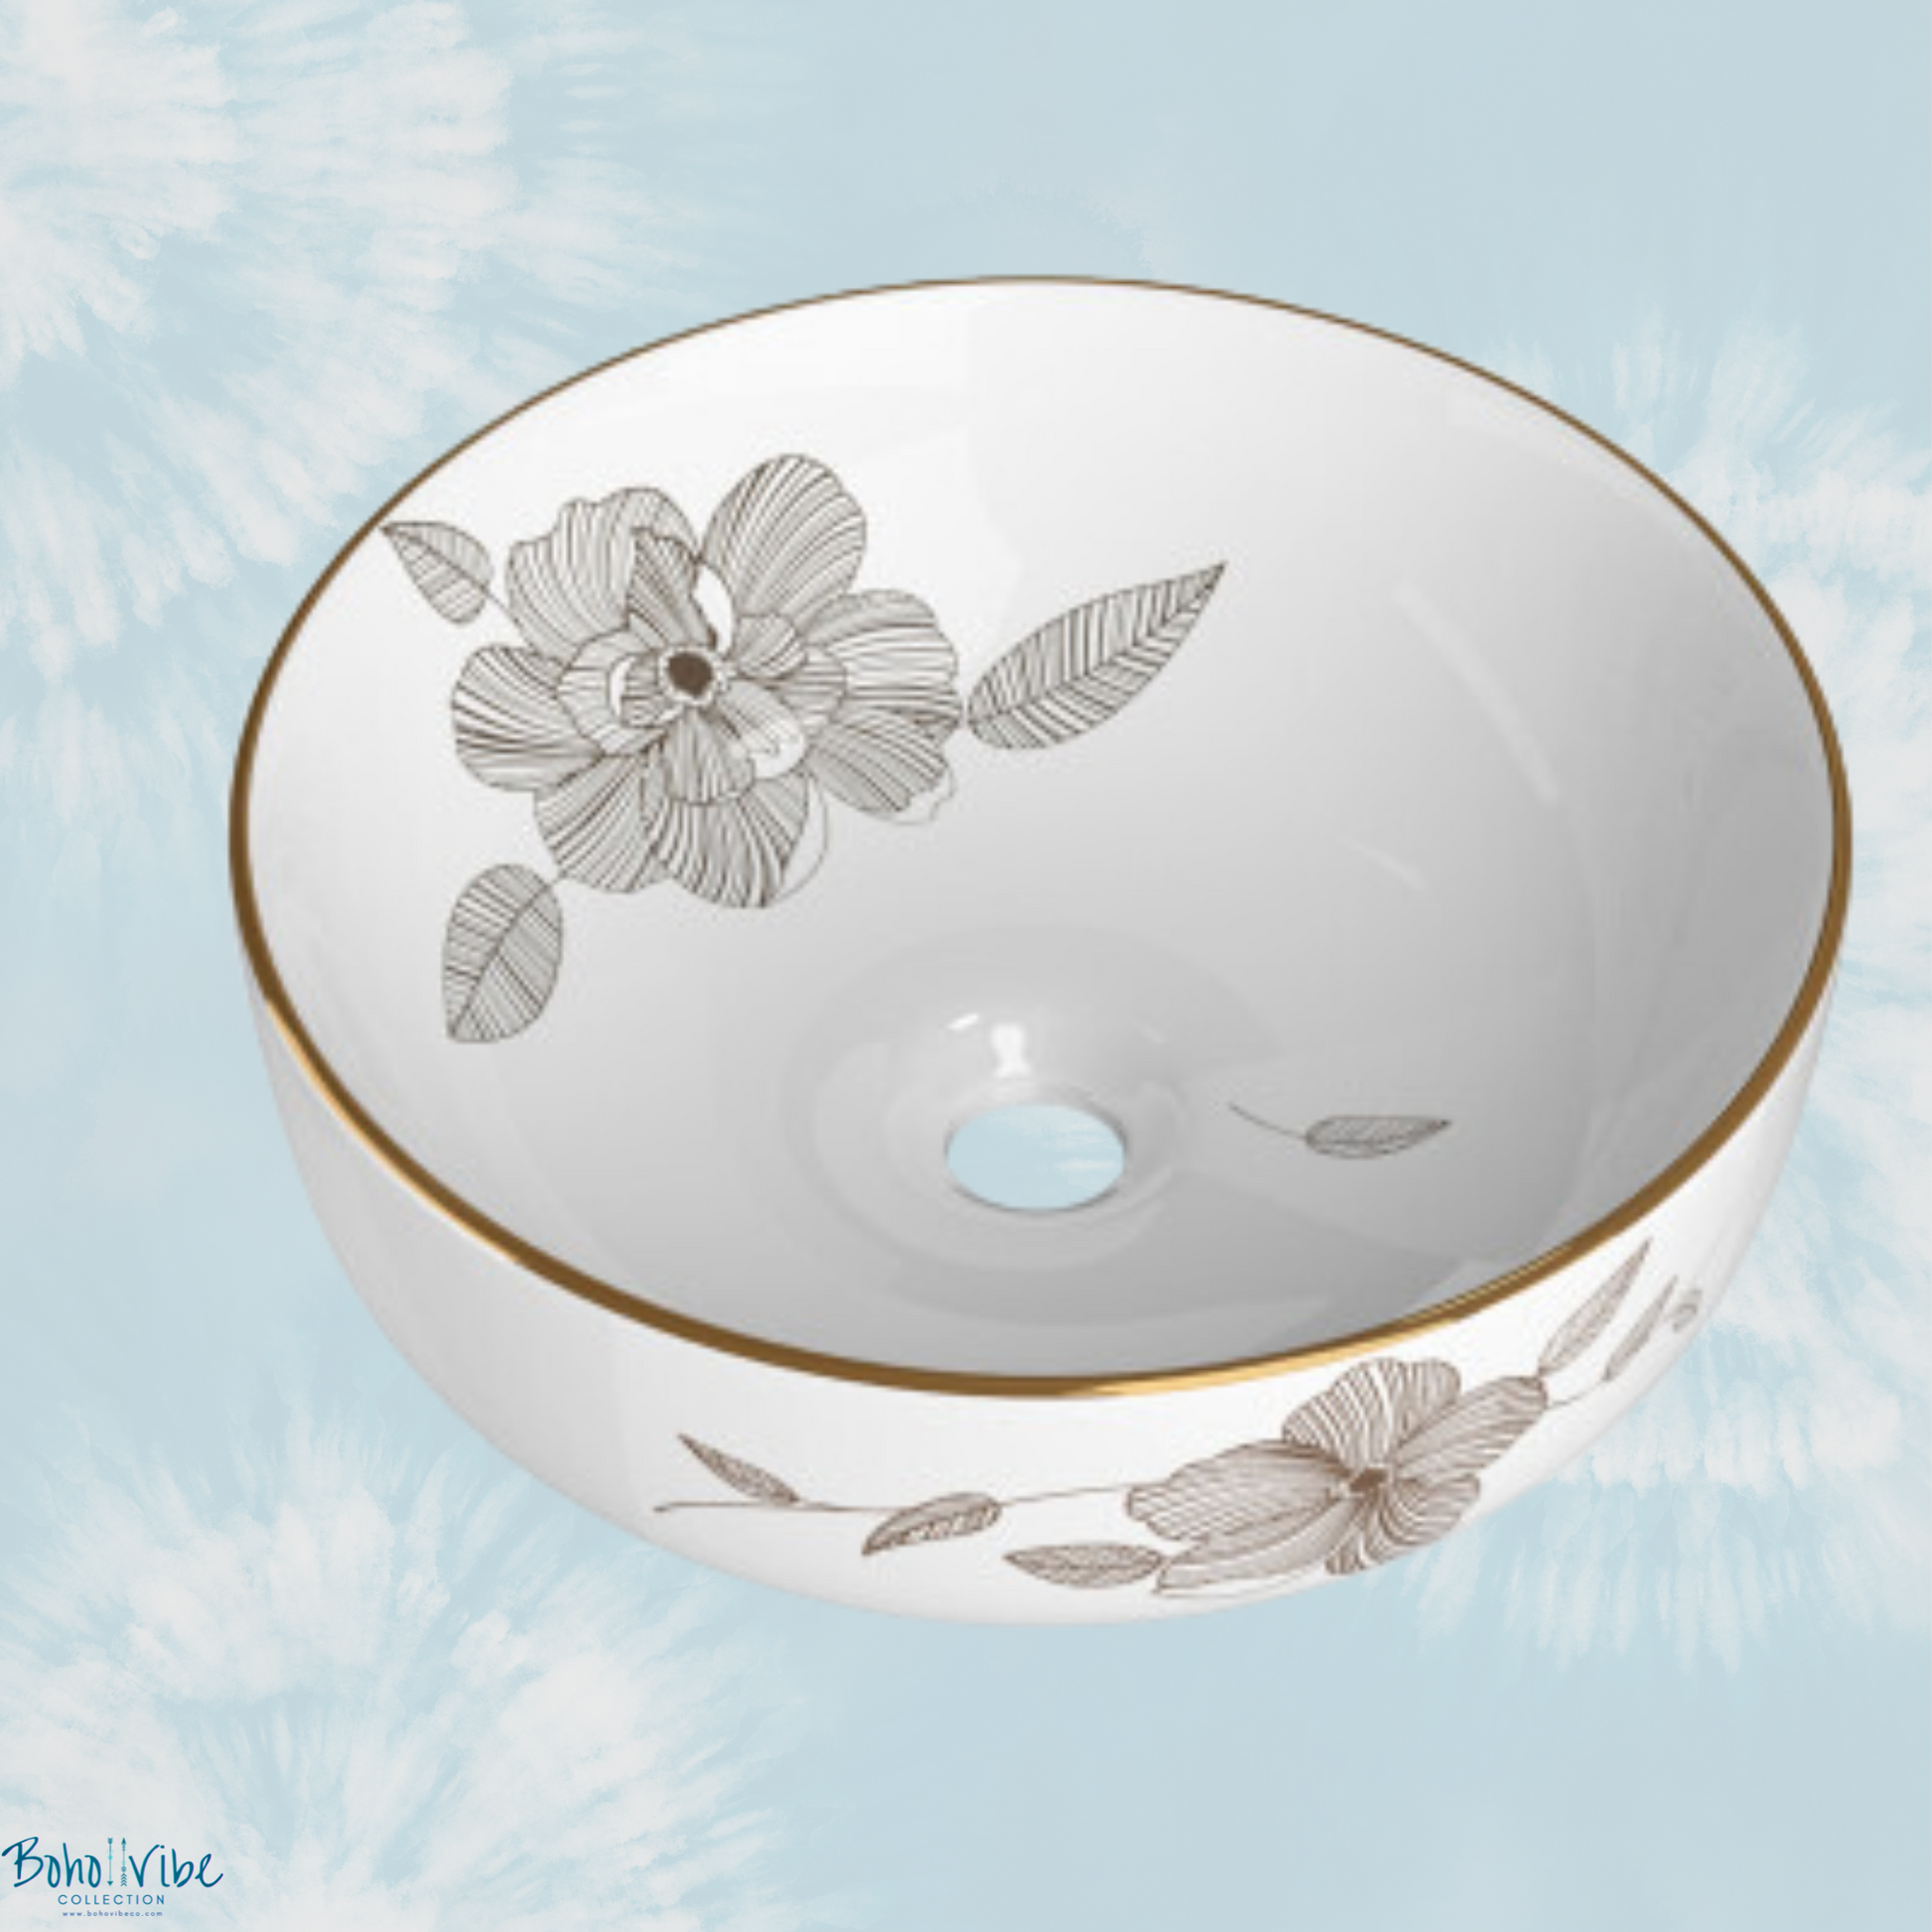 Boho ↡↟ Vibe Collection ↠ Flower Pattern Ceramic Cerfito Bathroom Sink Basin